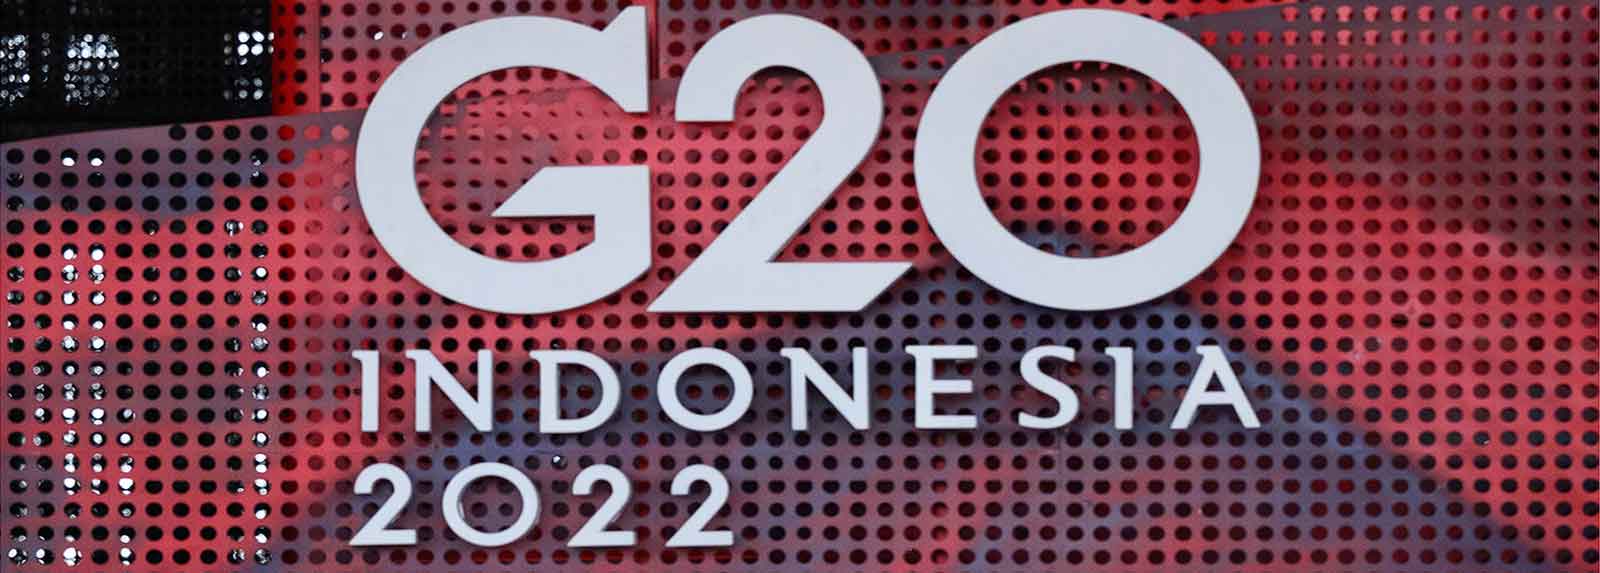 Indonesia-G20-Nov15-lead-1600